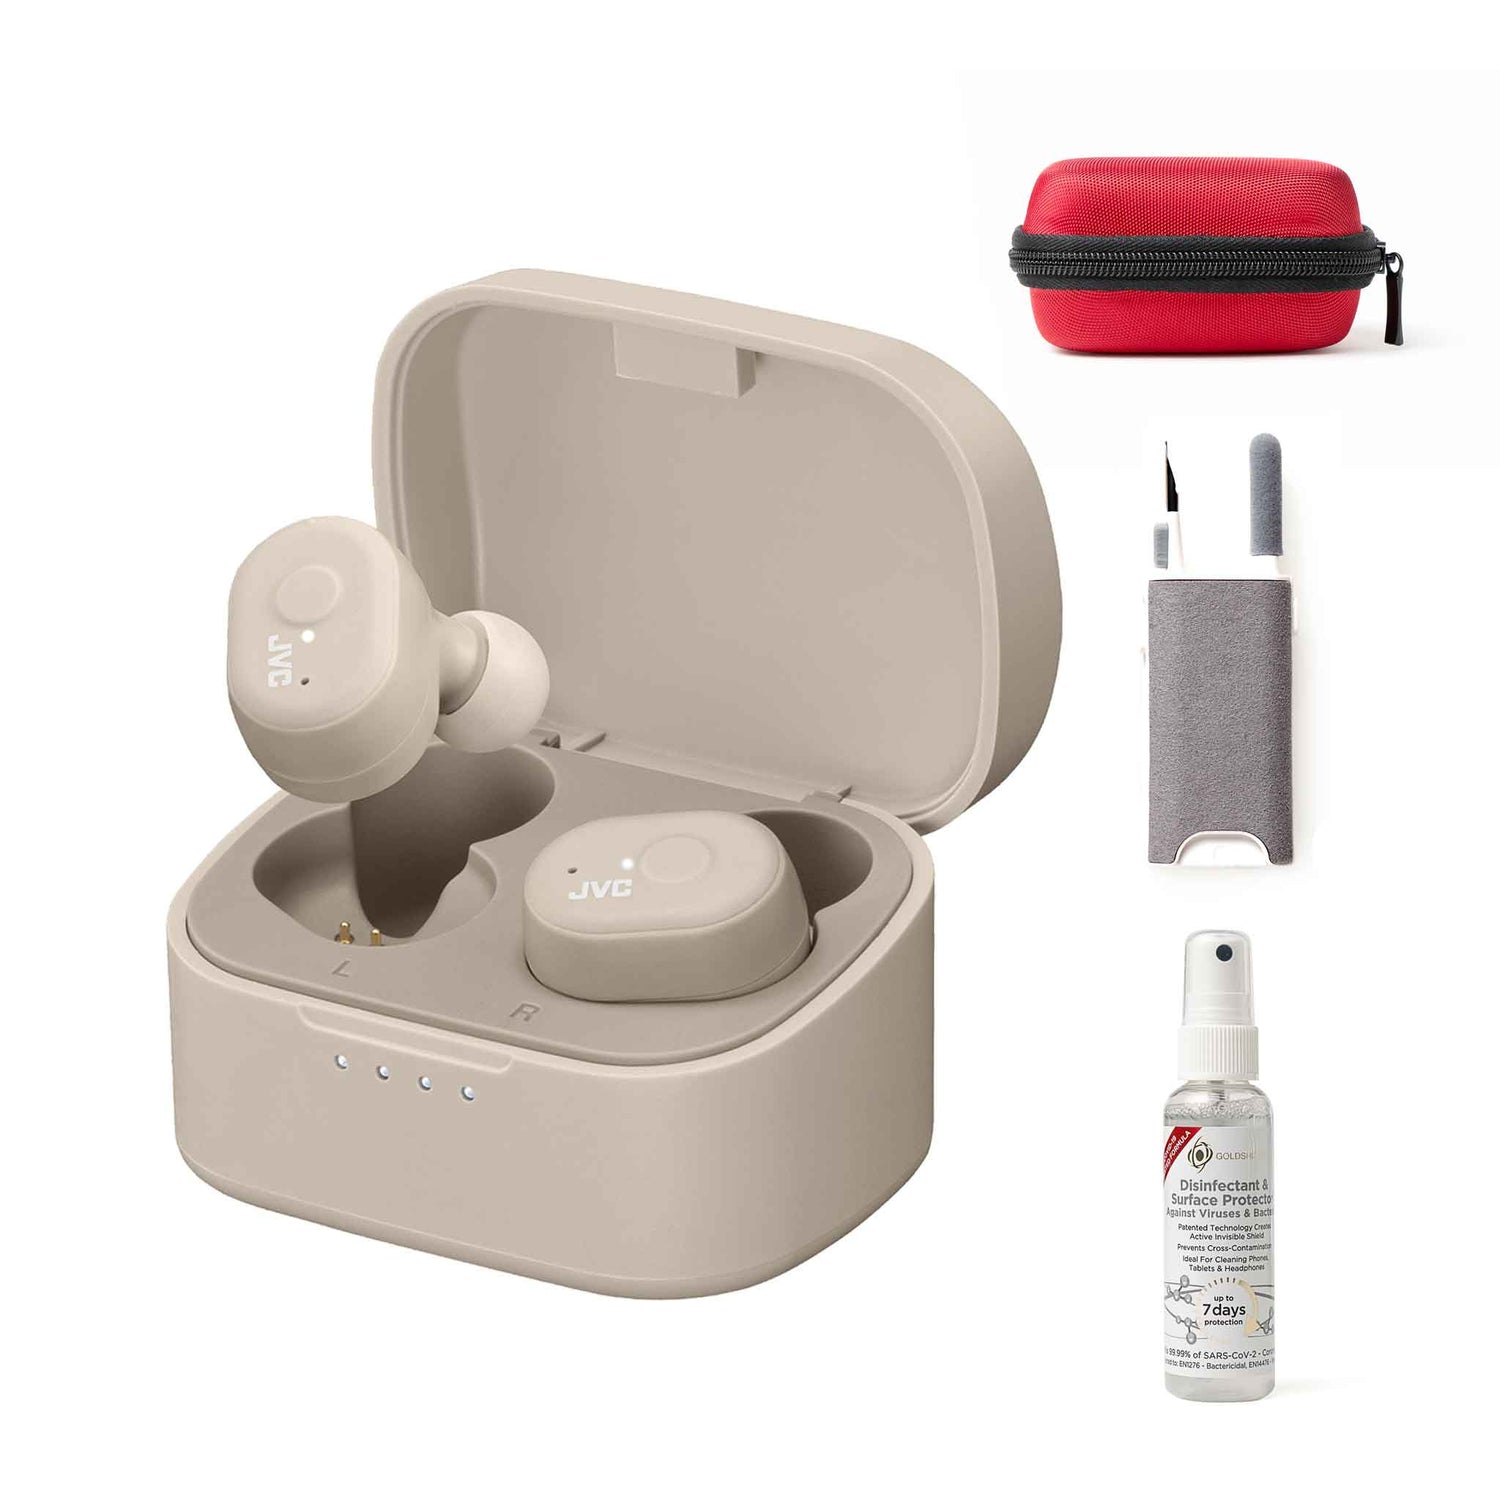 HA-A11T-B wireless earbuds, cleaning kit, case